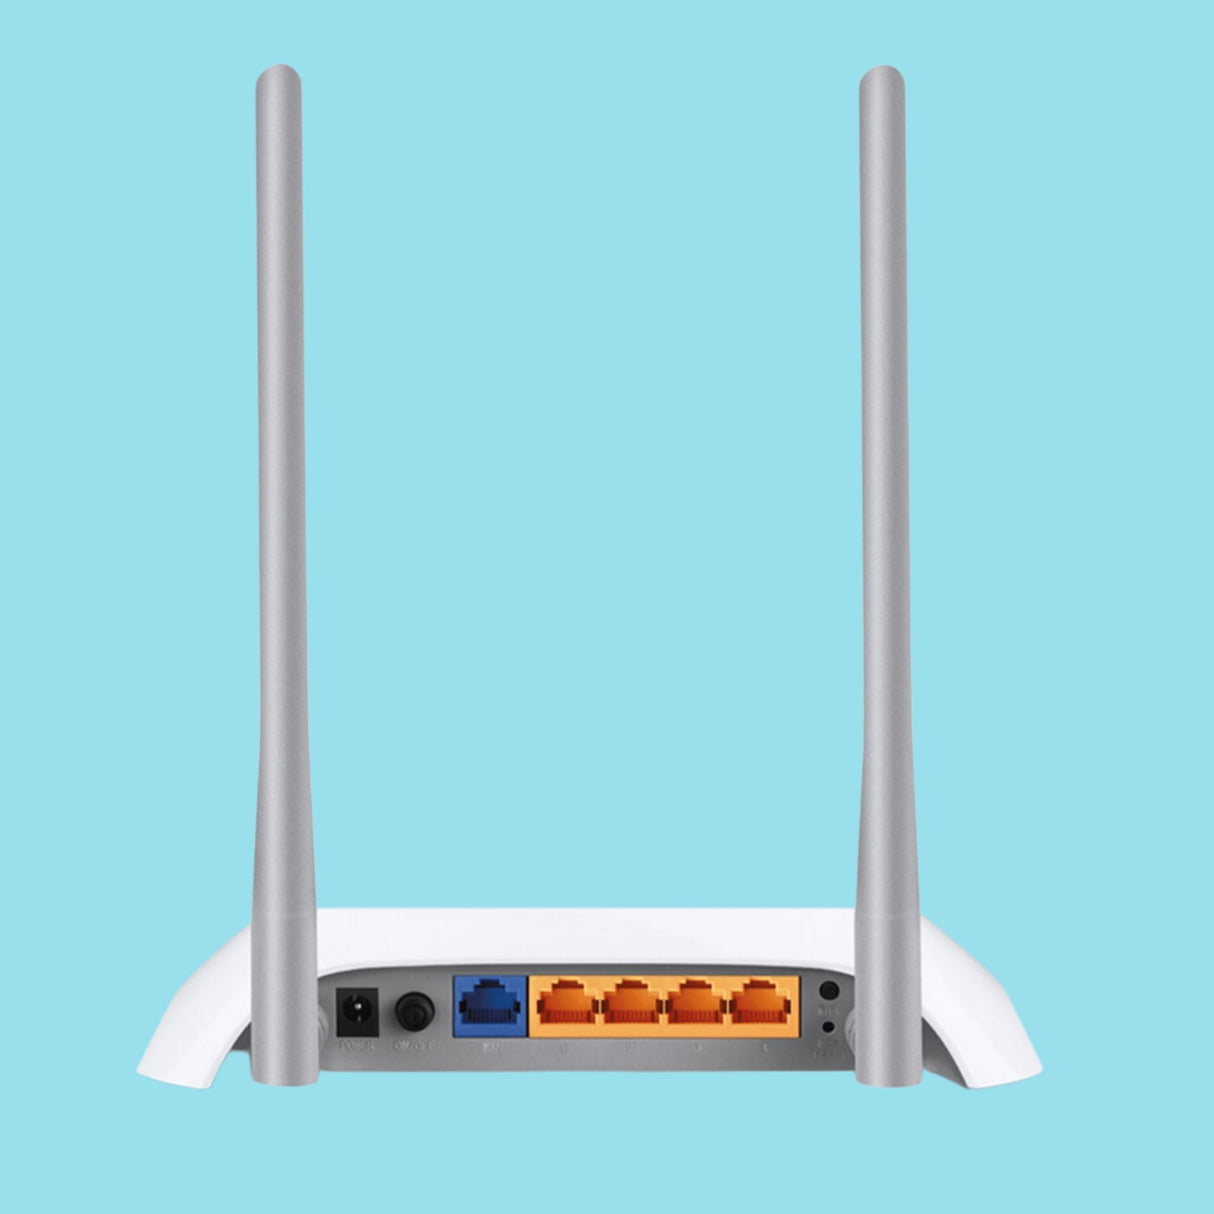 TP-Link 3G/4G Wireless N Router, TL-MR342 – White  - KWT Tech Mart